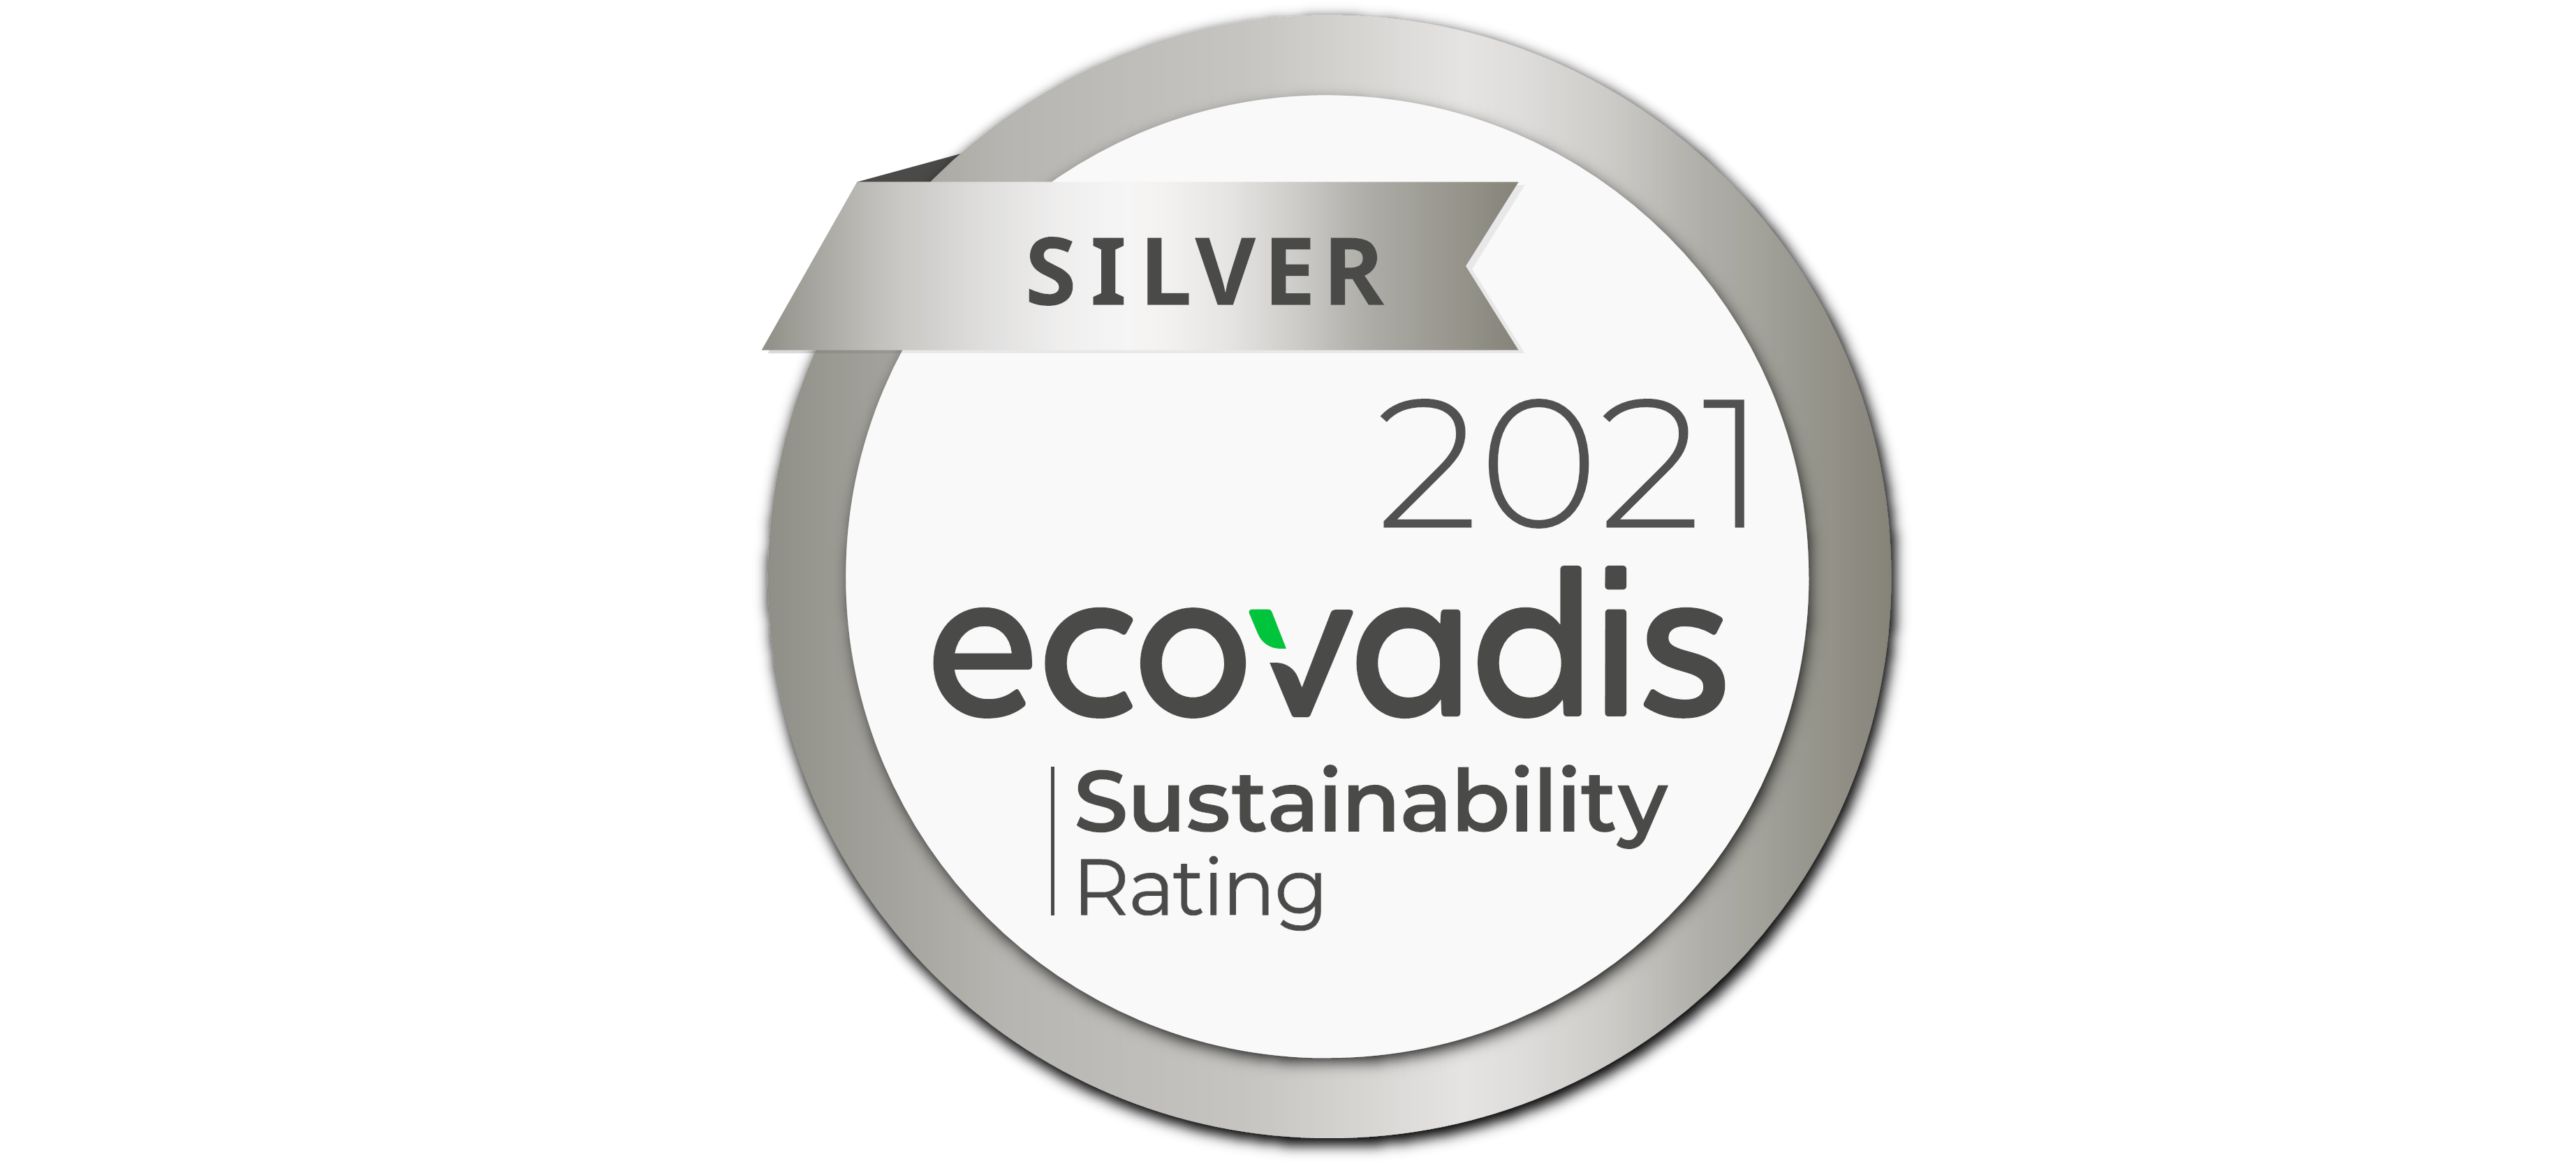 IMD demonstrates sustainability progress with EcoVadis rating  - IMD Business School